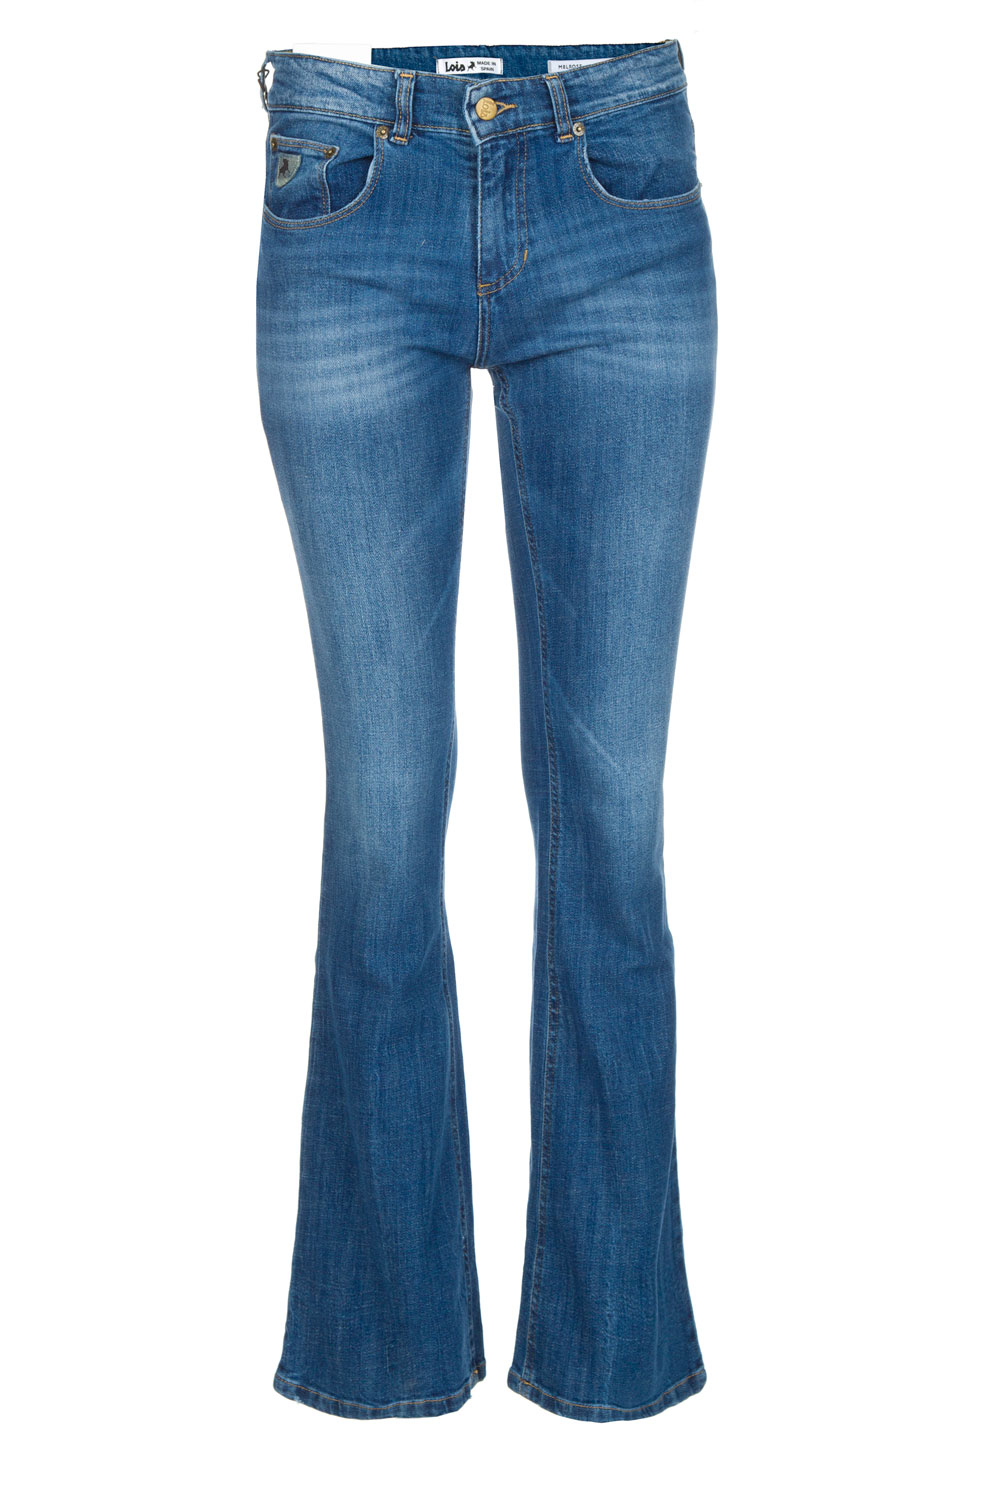 29 length jeans